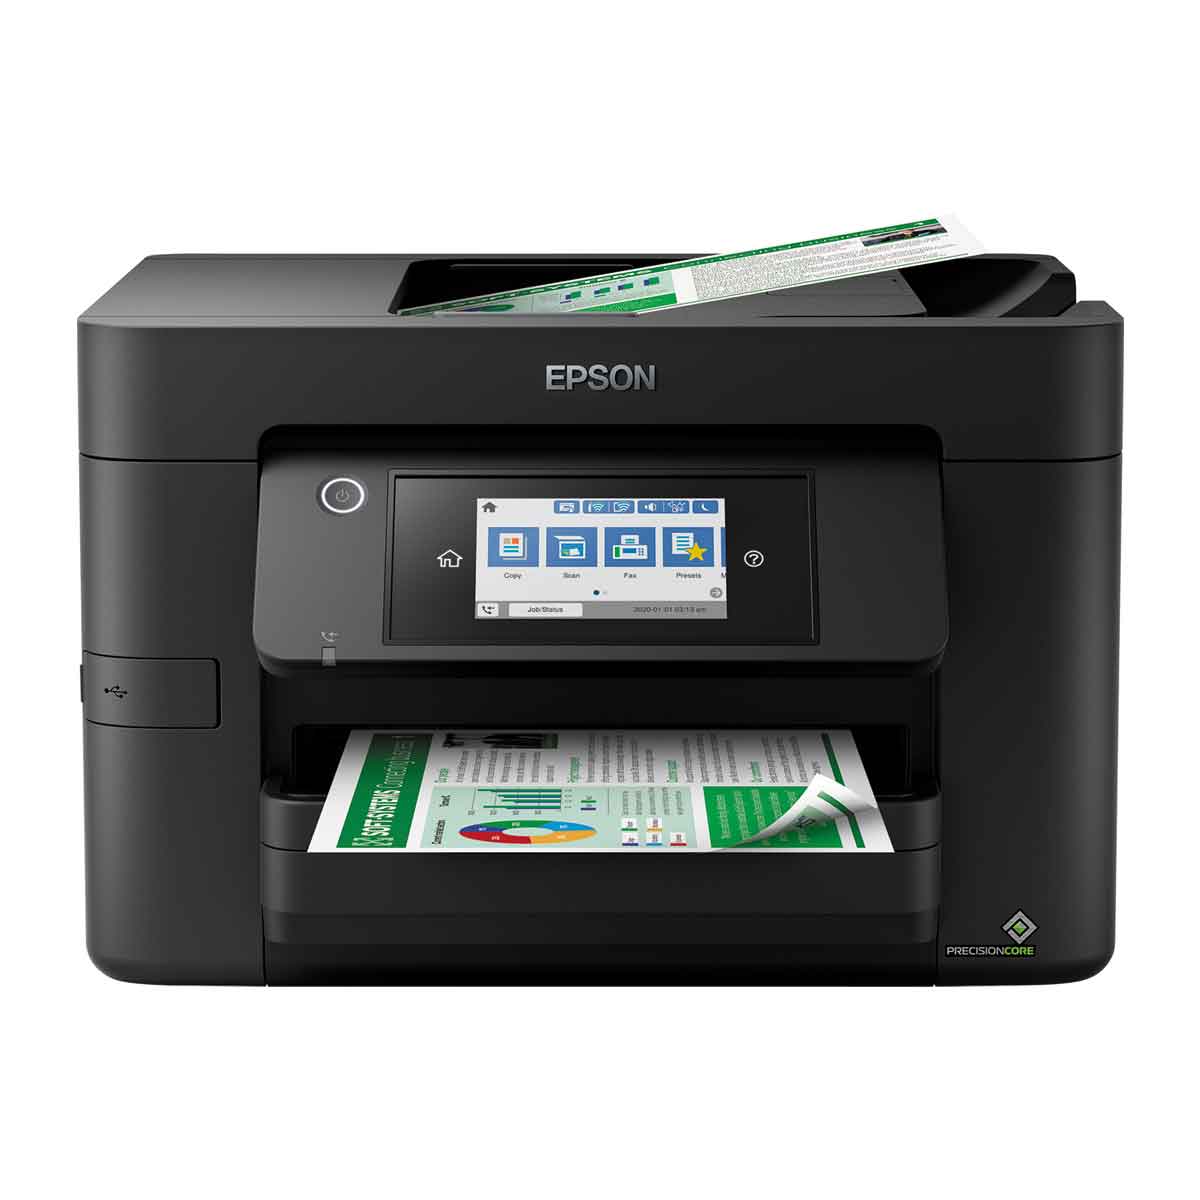 Epson WorkForce WF-4820 All in One Wireless Inkjet Printer, none